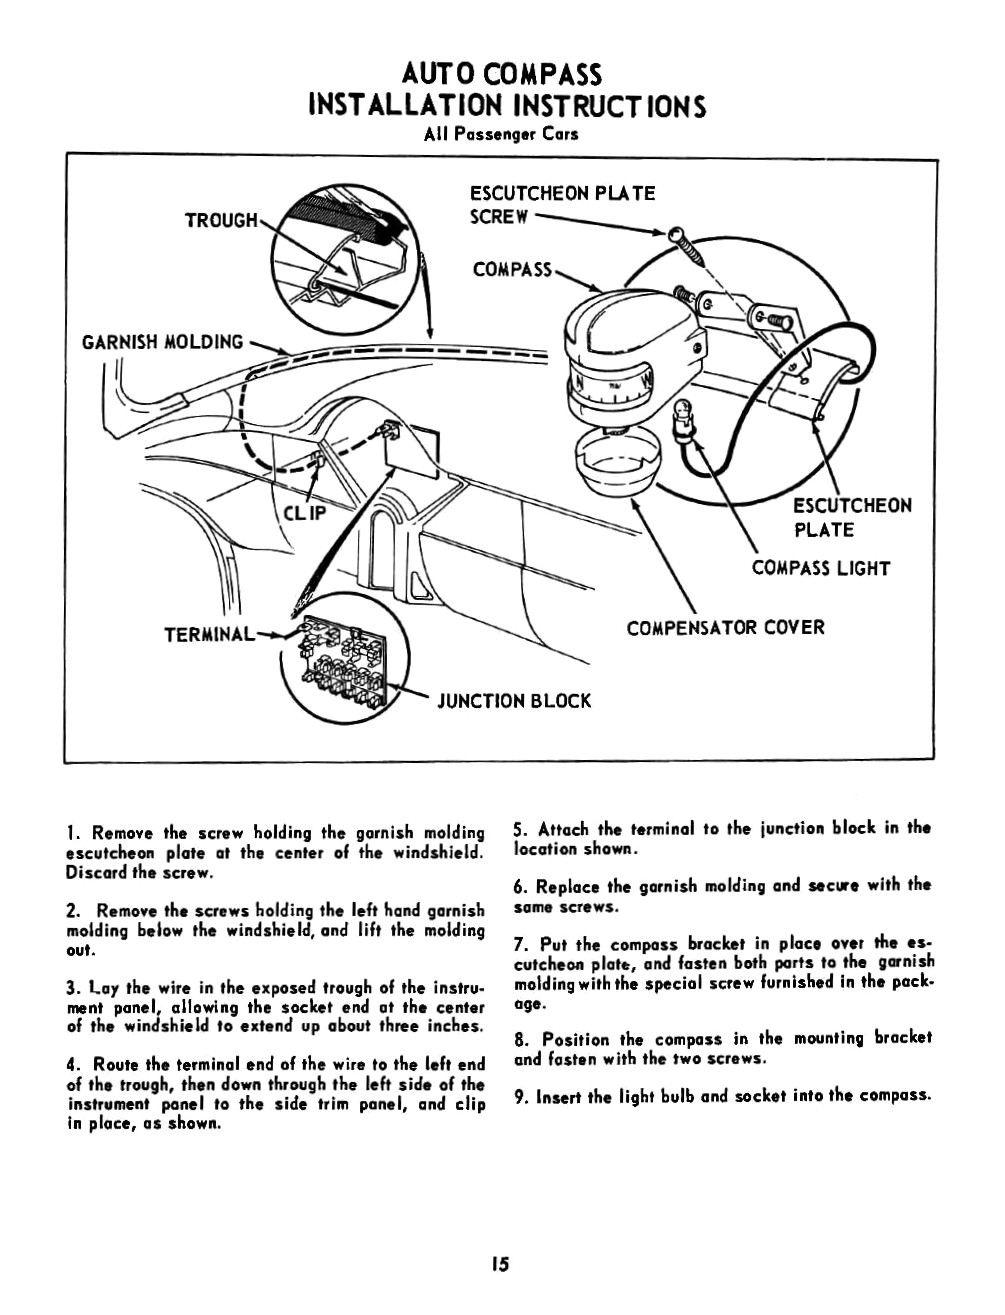 1955_Chevrolet_Acc_Manual-15